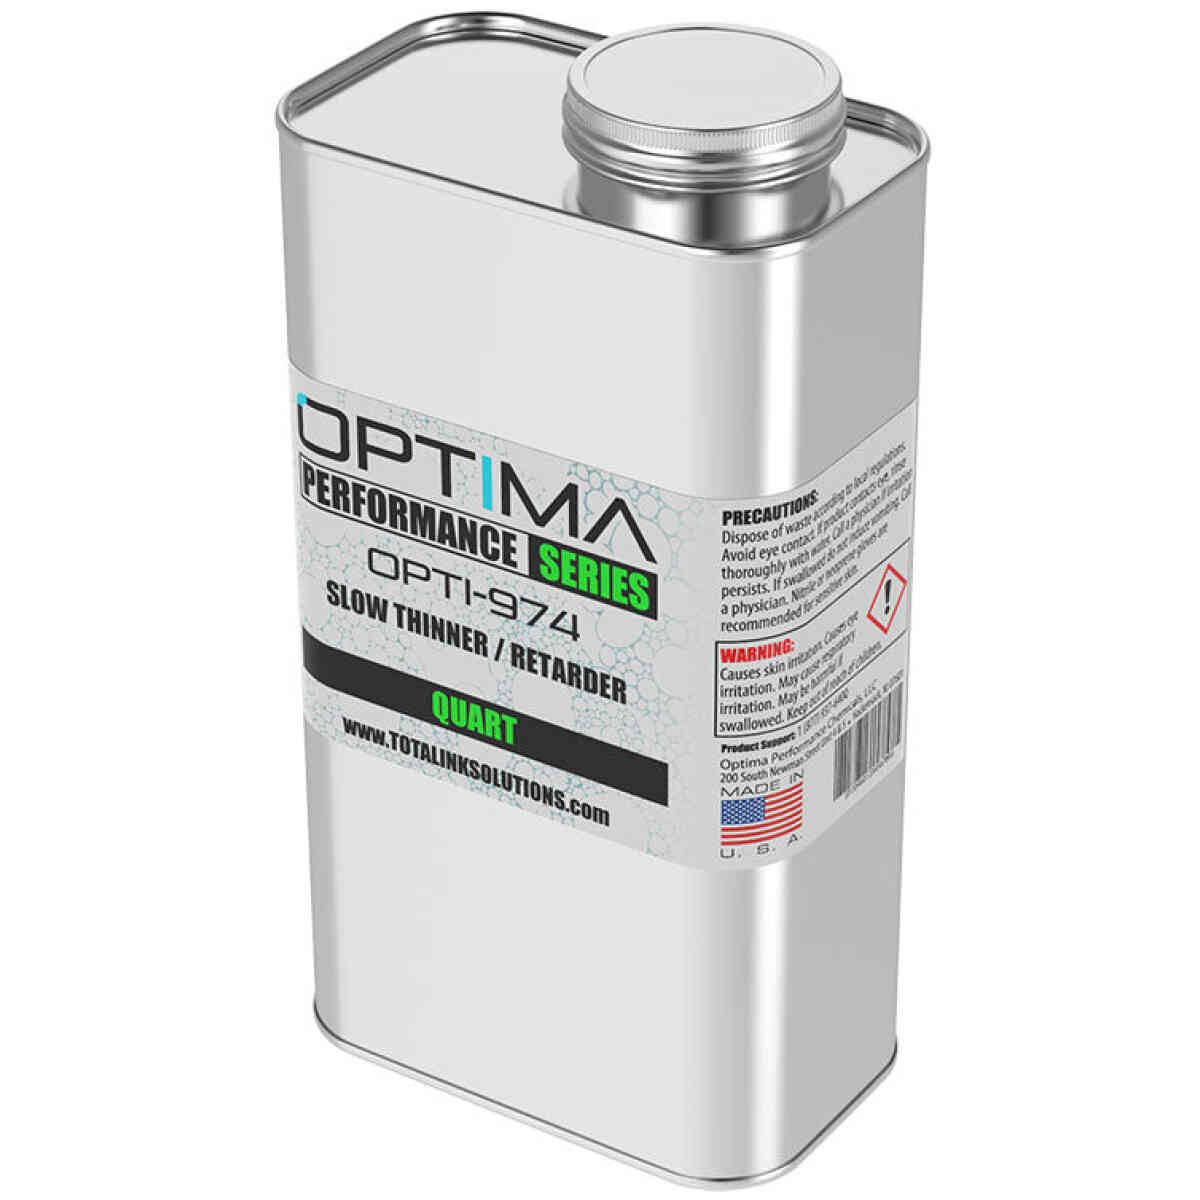 Opti-974 Slow Thinner / Retarder OPTIMA PERFORMANCE SERIES®